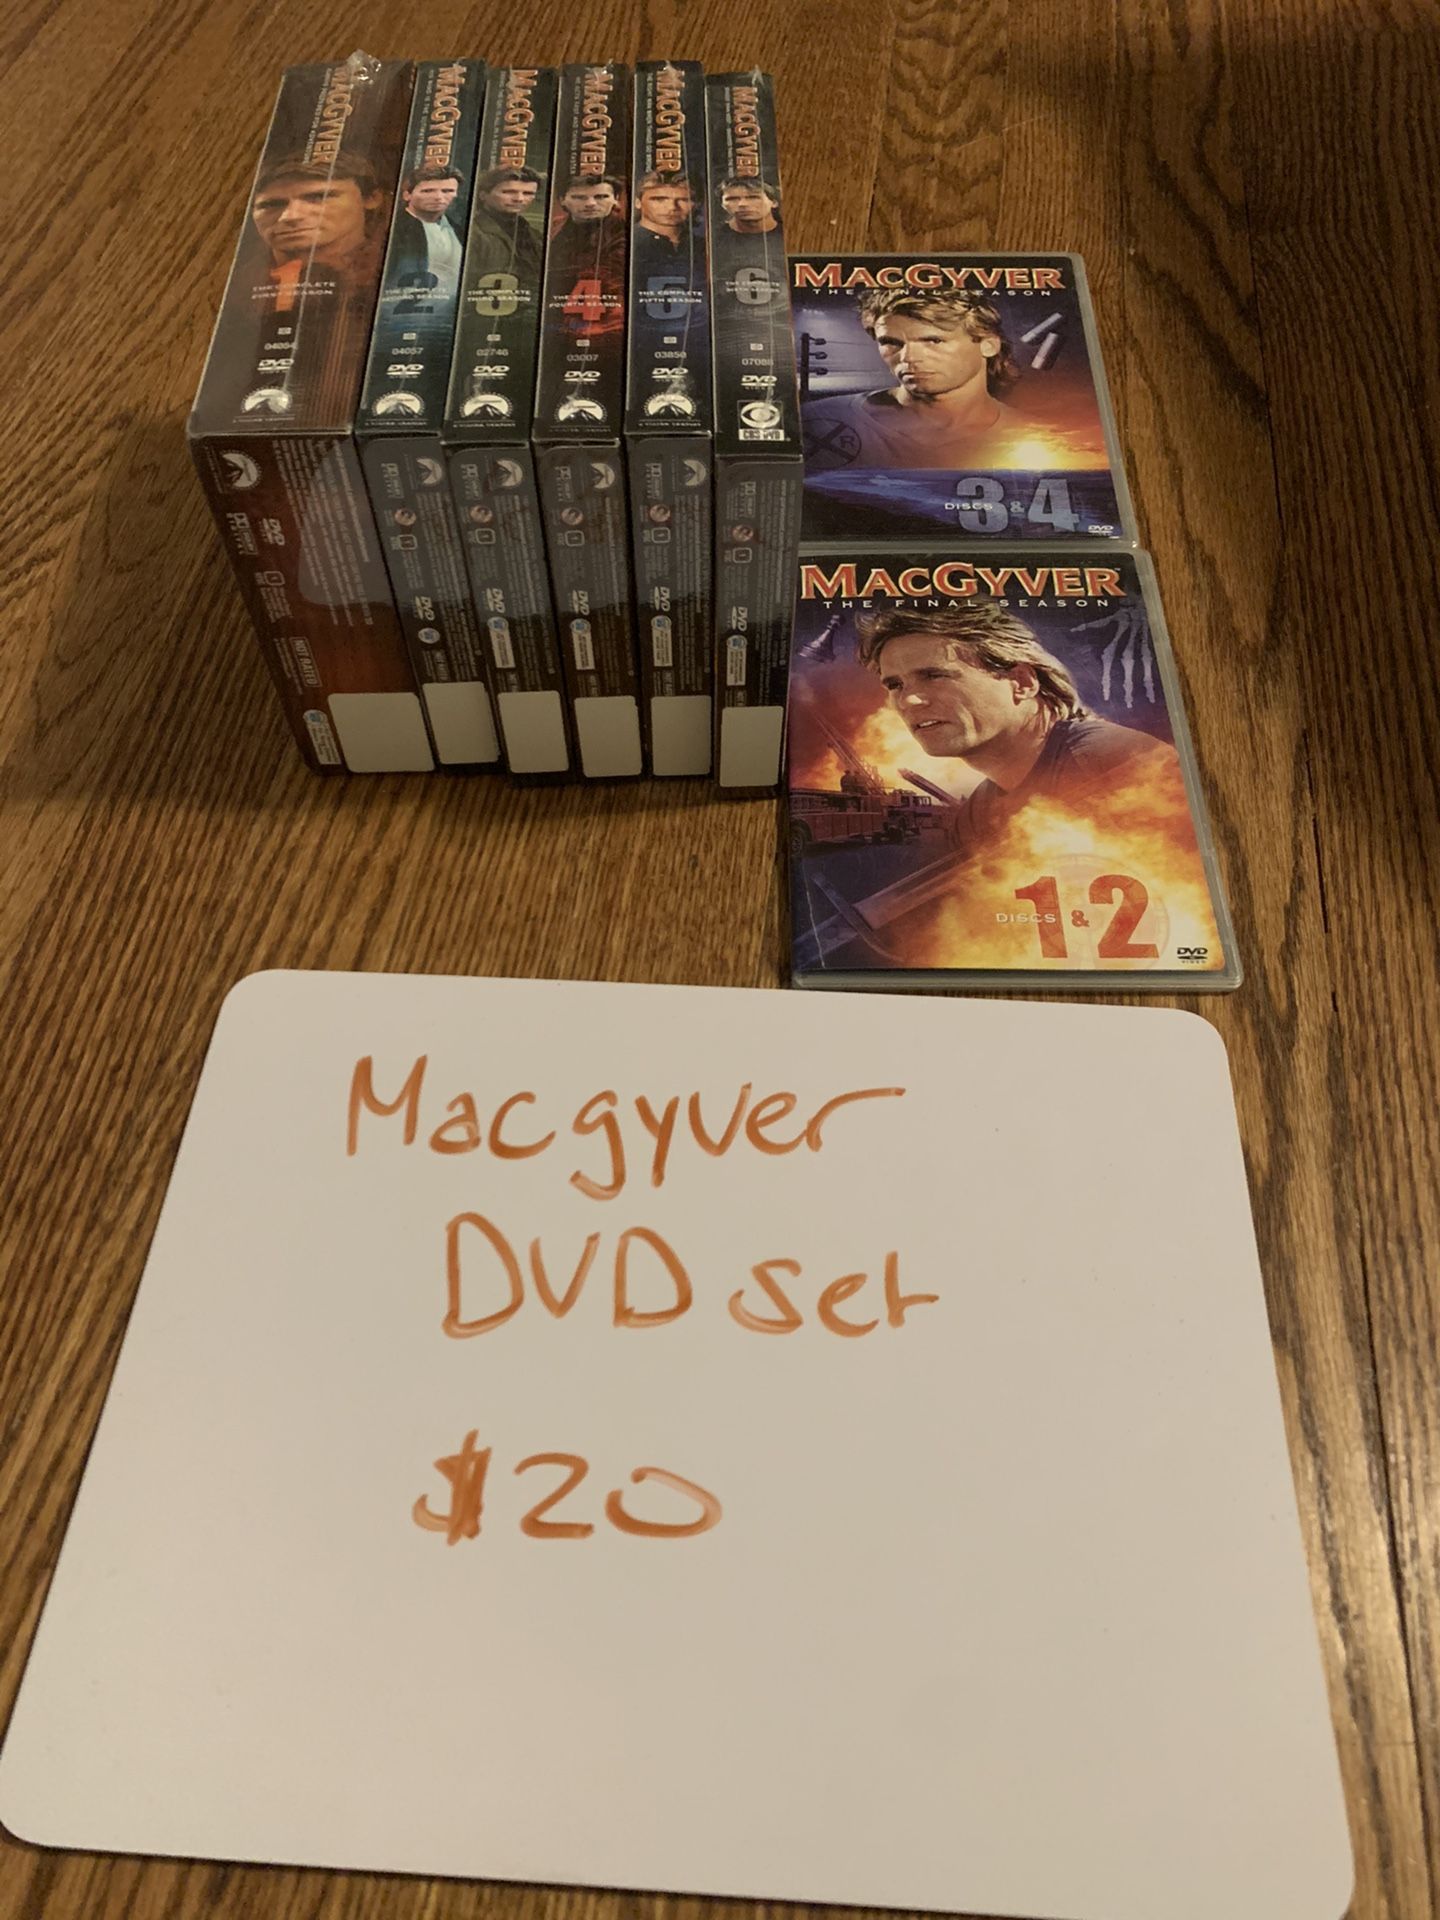 Macgyver DVD set